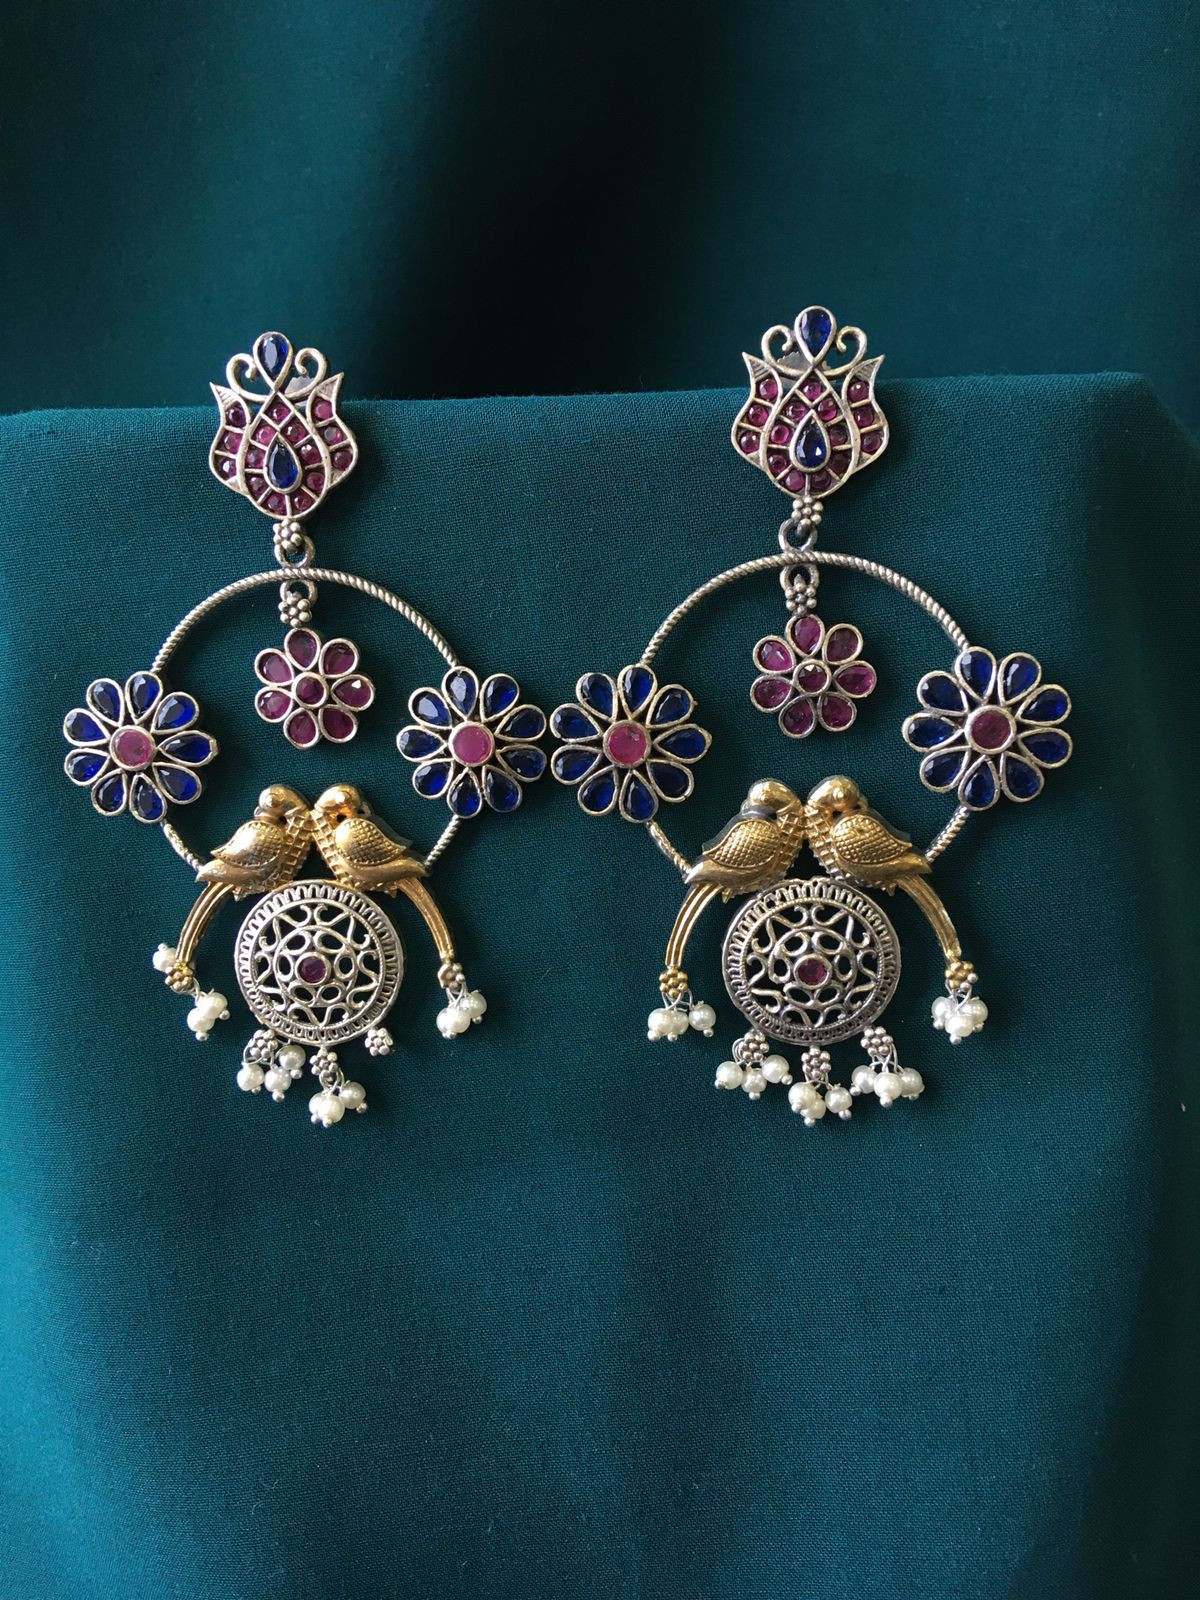 Beaded Stone Based Oxidized Earrings in Pink & Blue